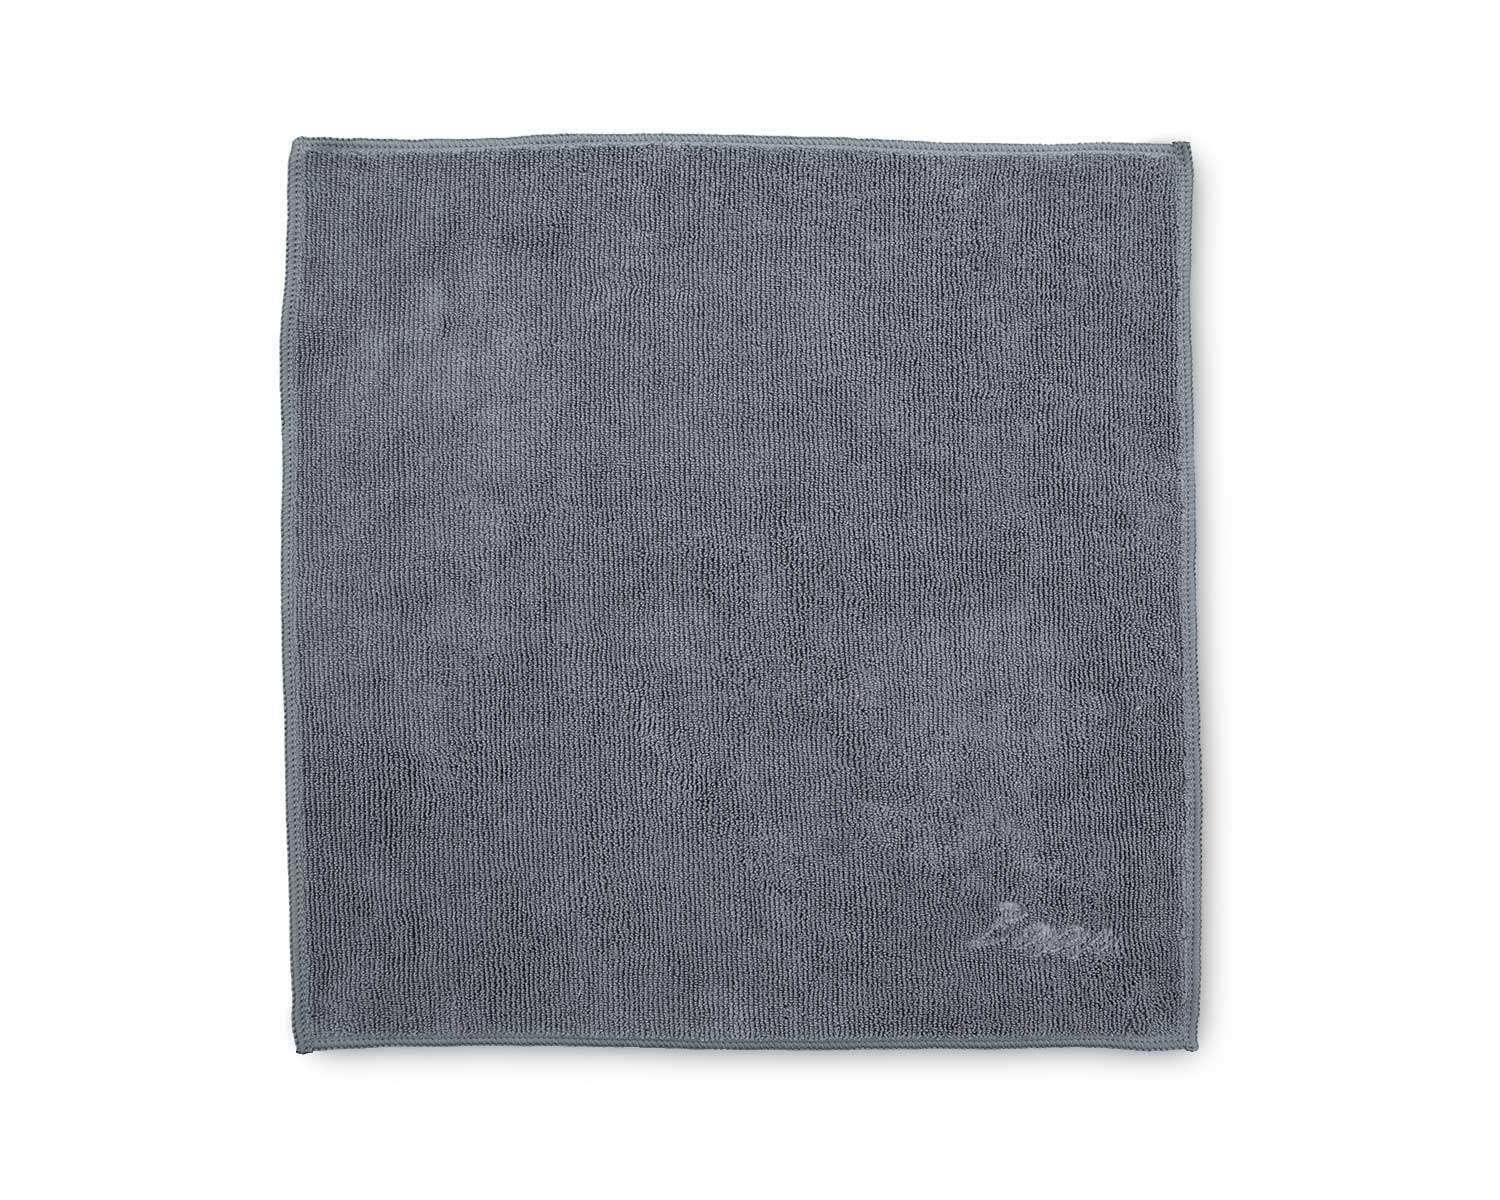 Baan Microfiber Towel 40x40